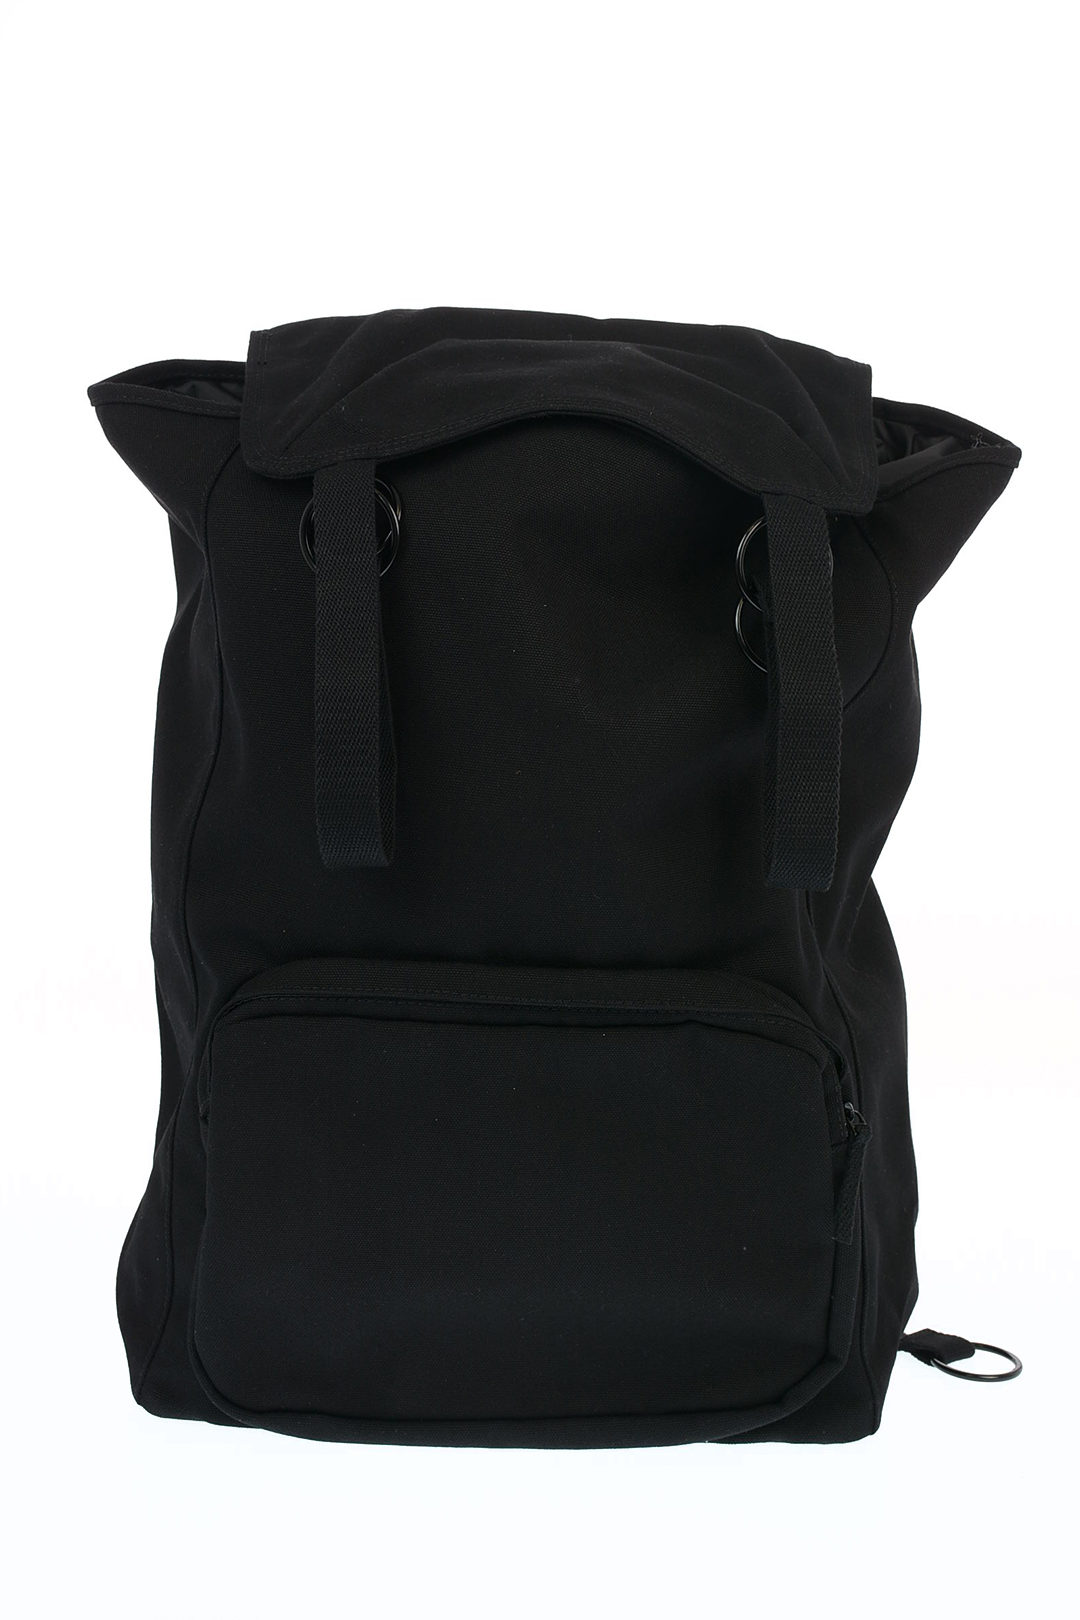 EASTPAK Fabric Backpack